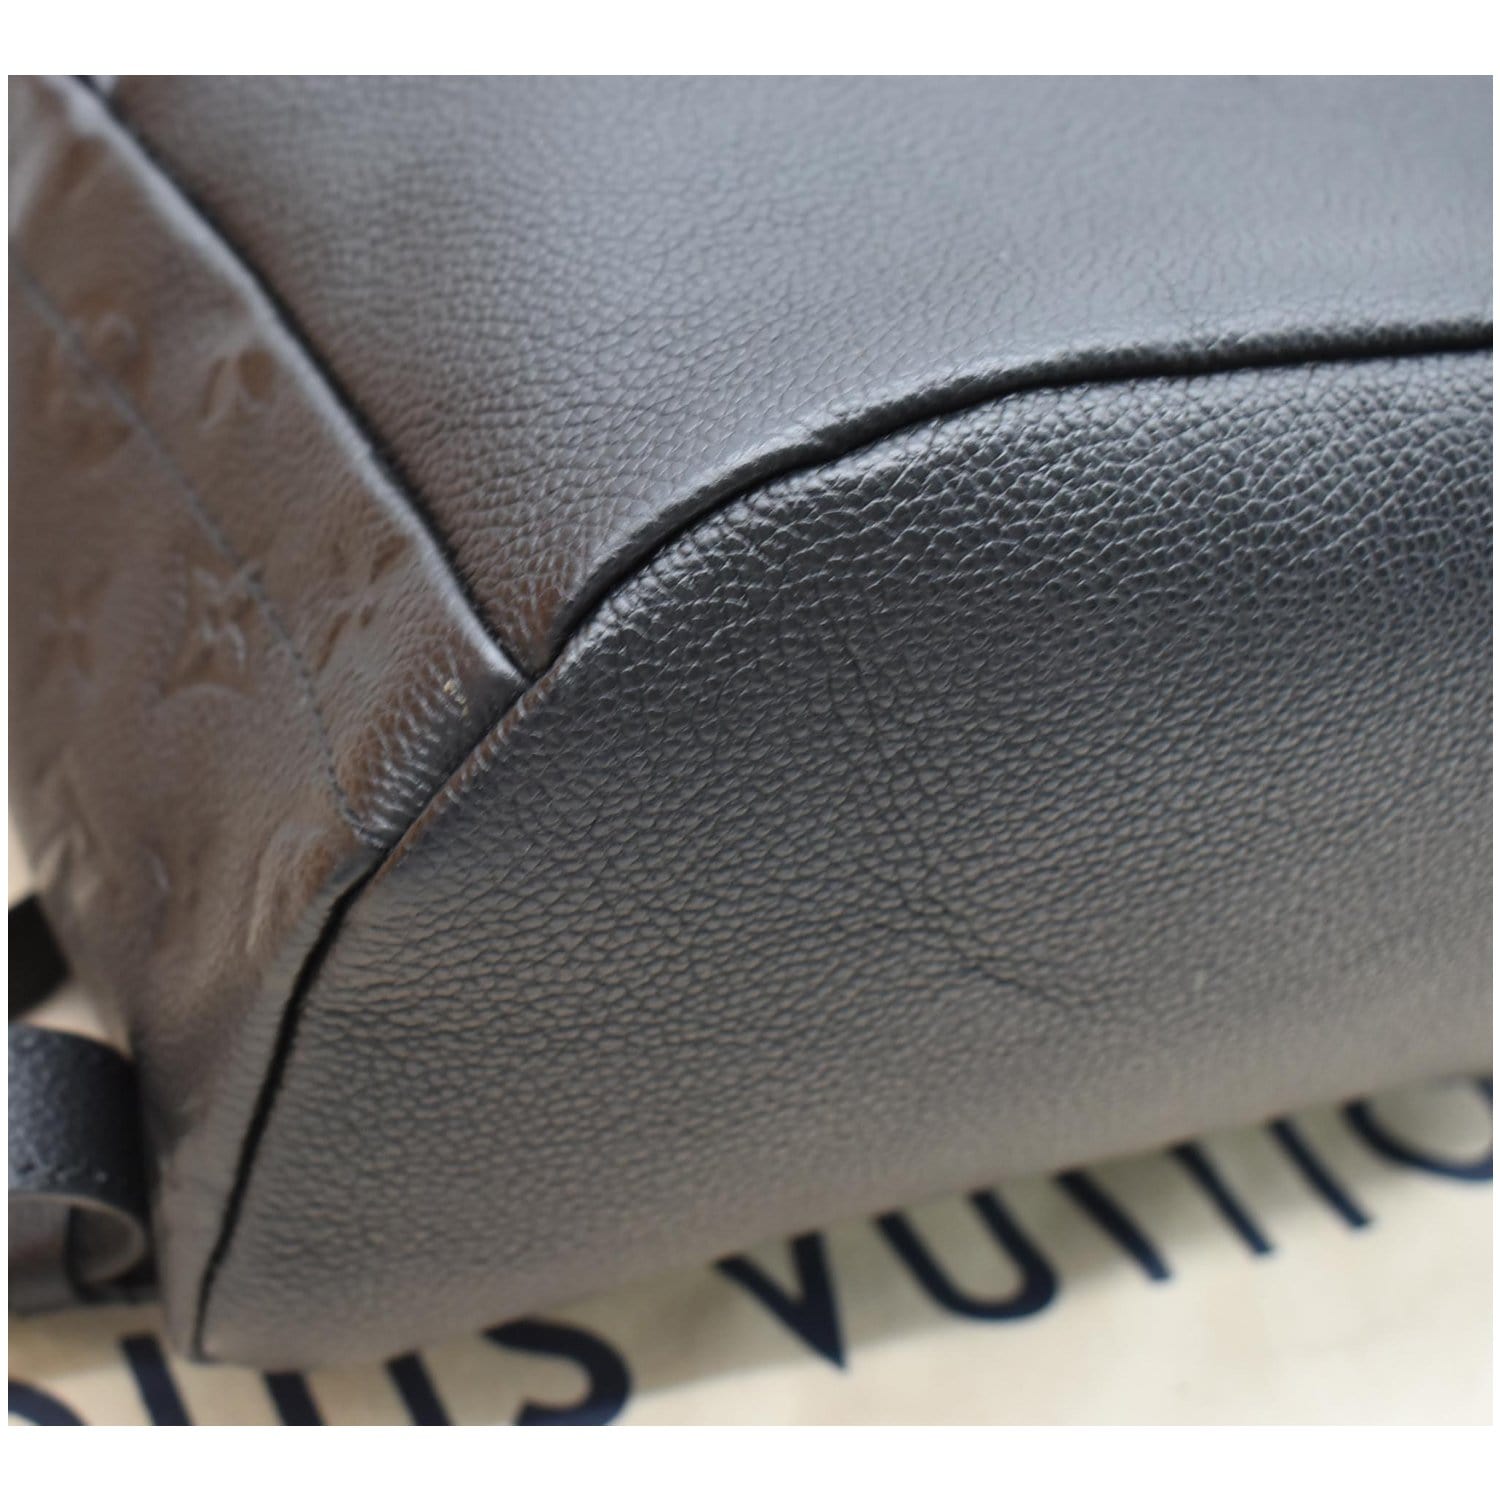 Louis Vuitton Black '17 Empreinte 'Sorbonne' Backpack – The Little Bird